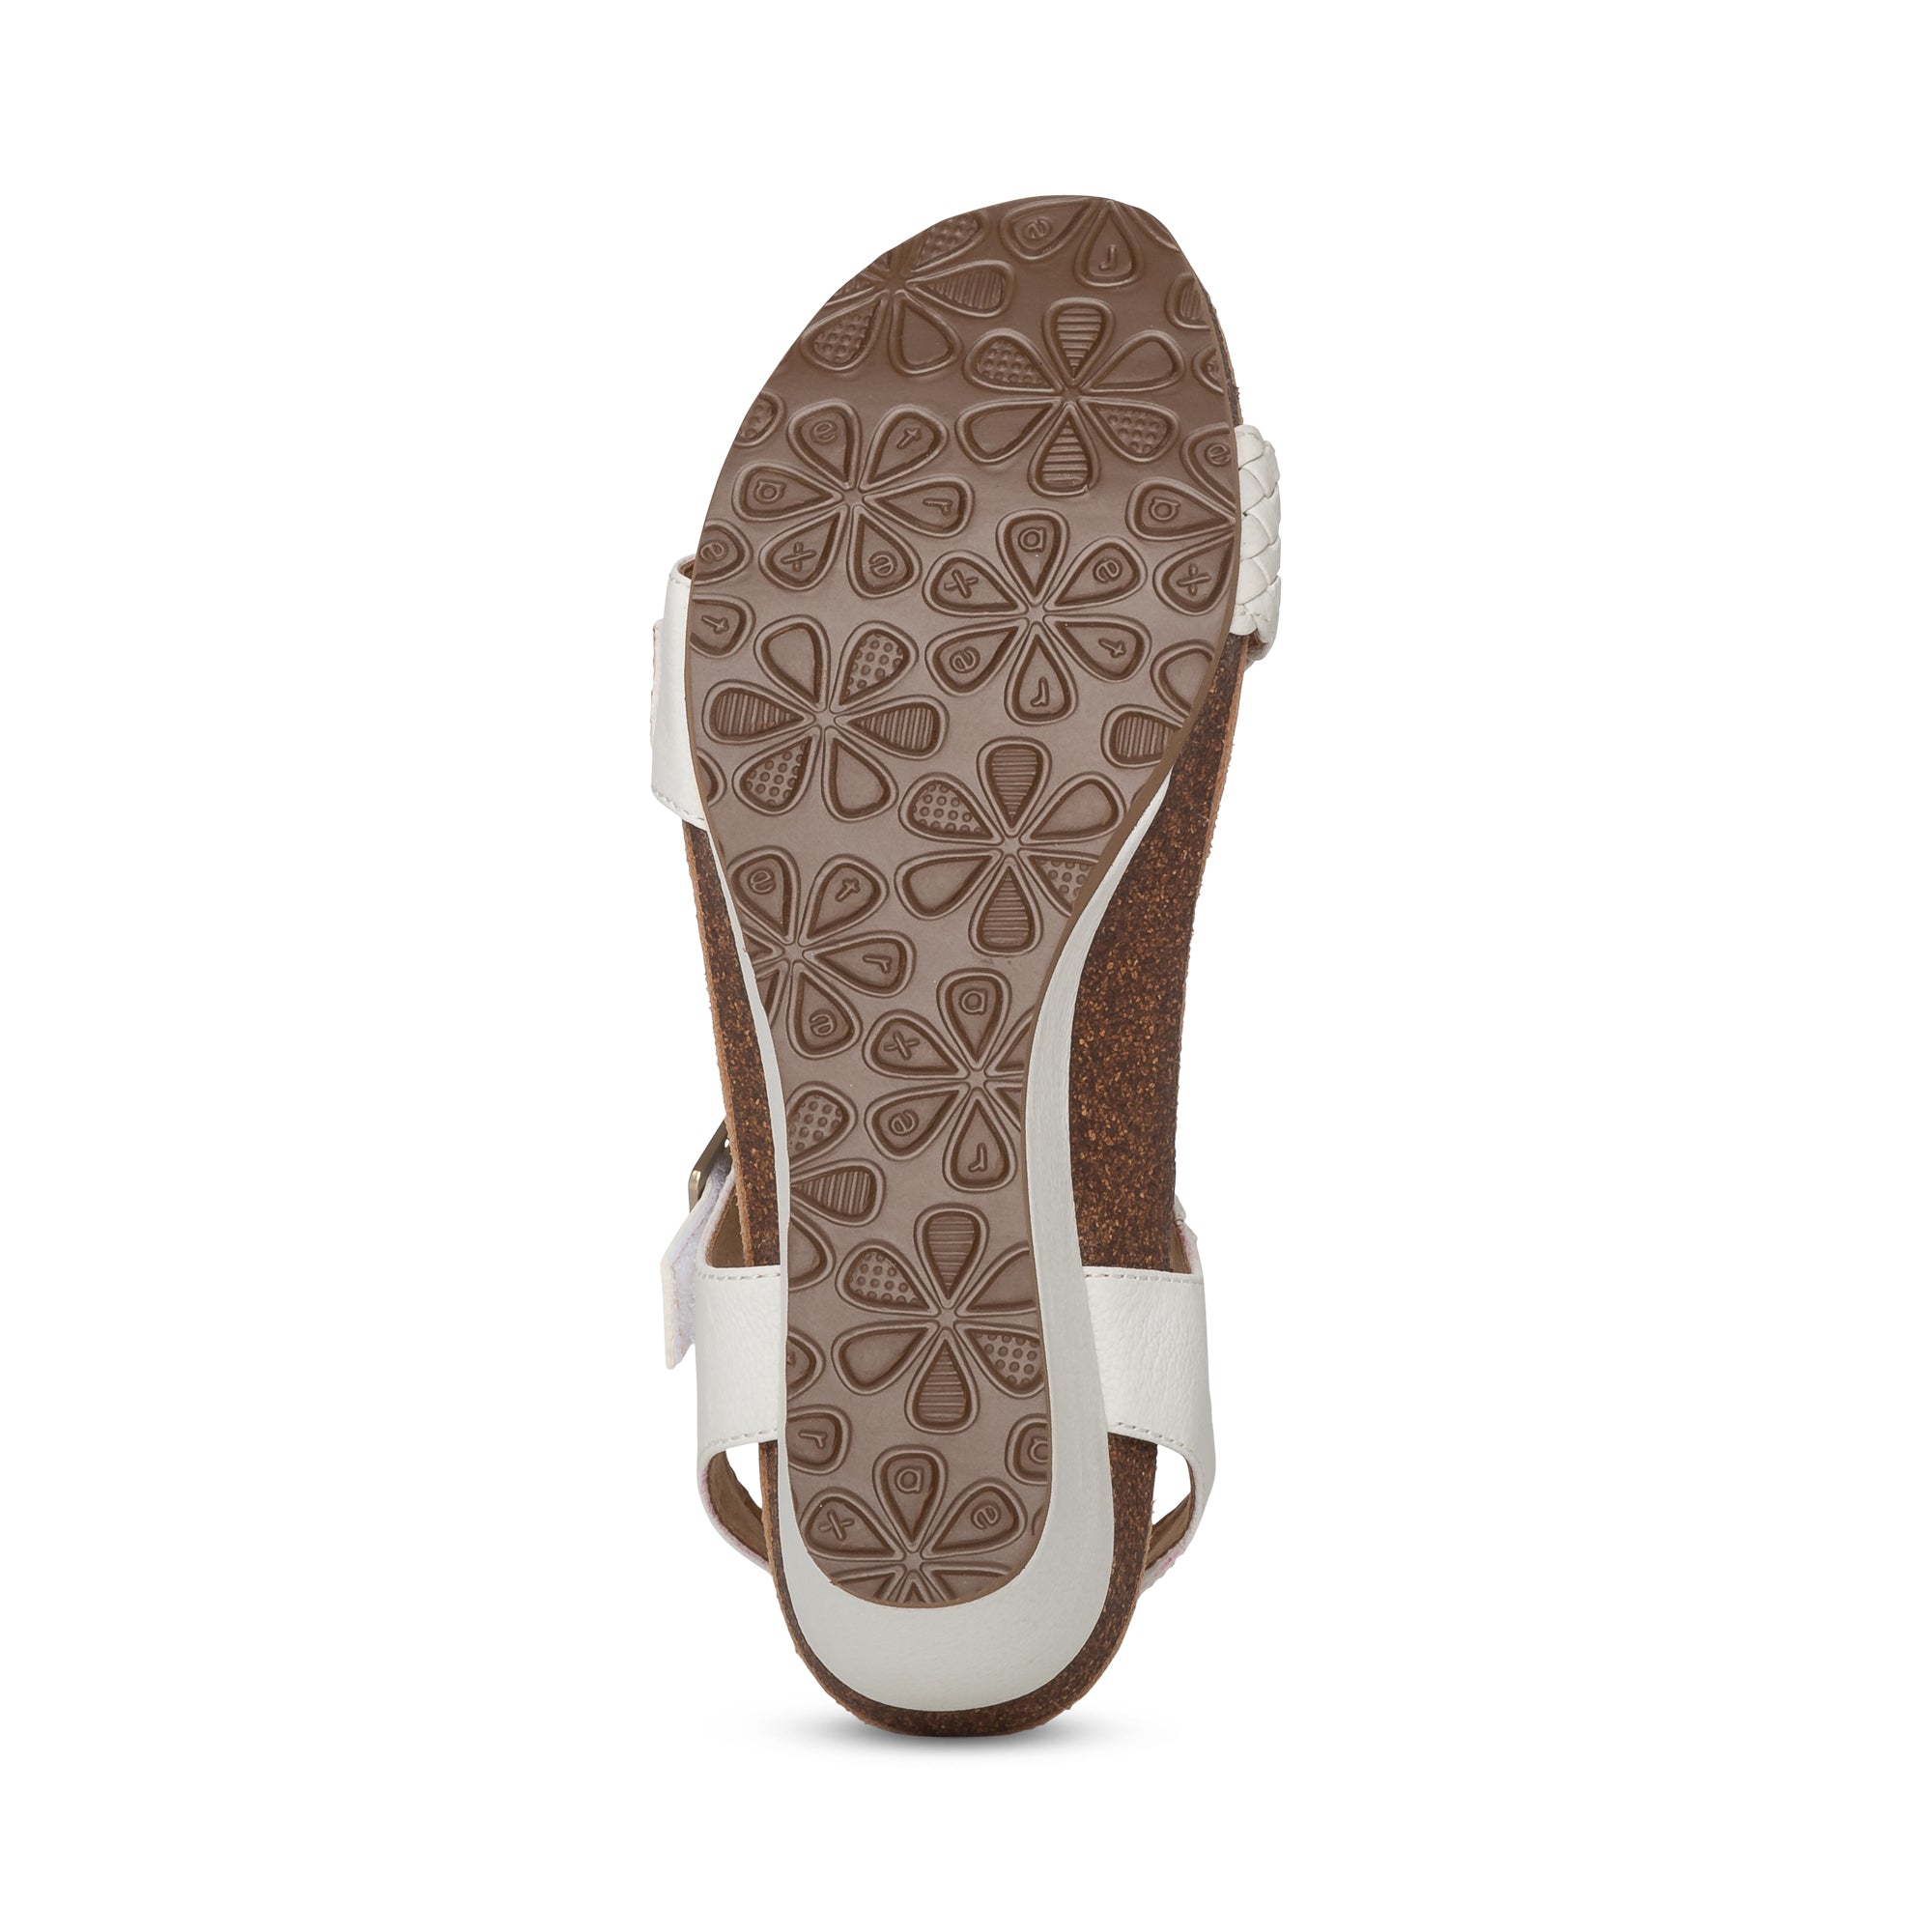 Women's Aetrex Grace Adjustable Woven Wedge Sandal in White